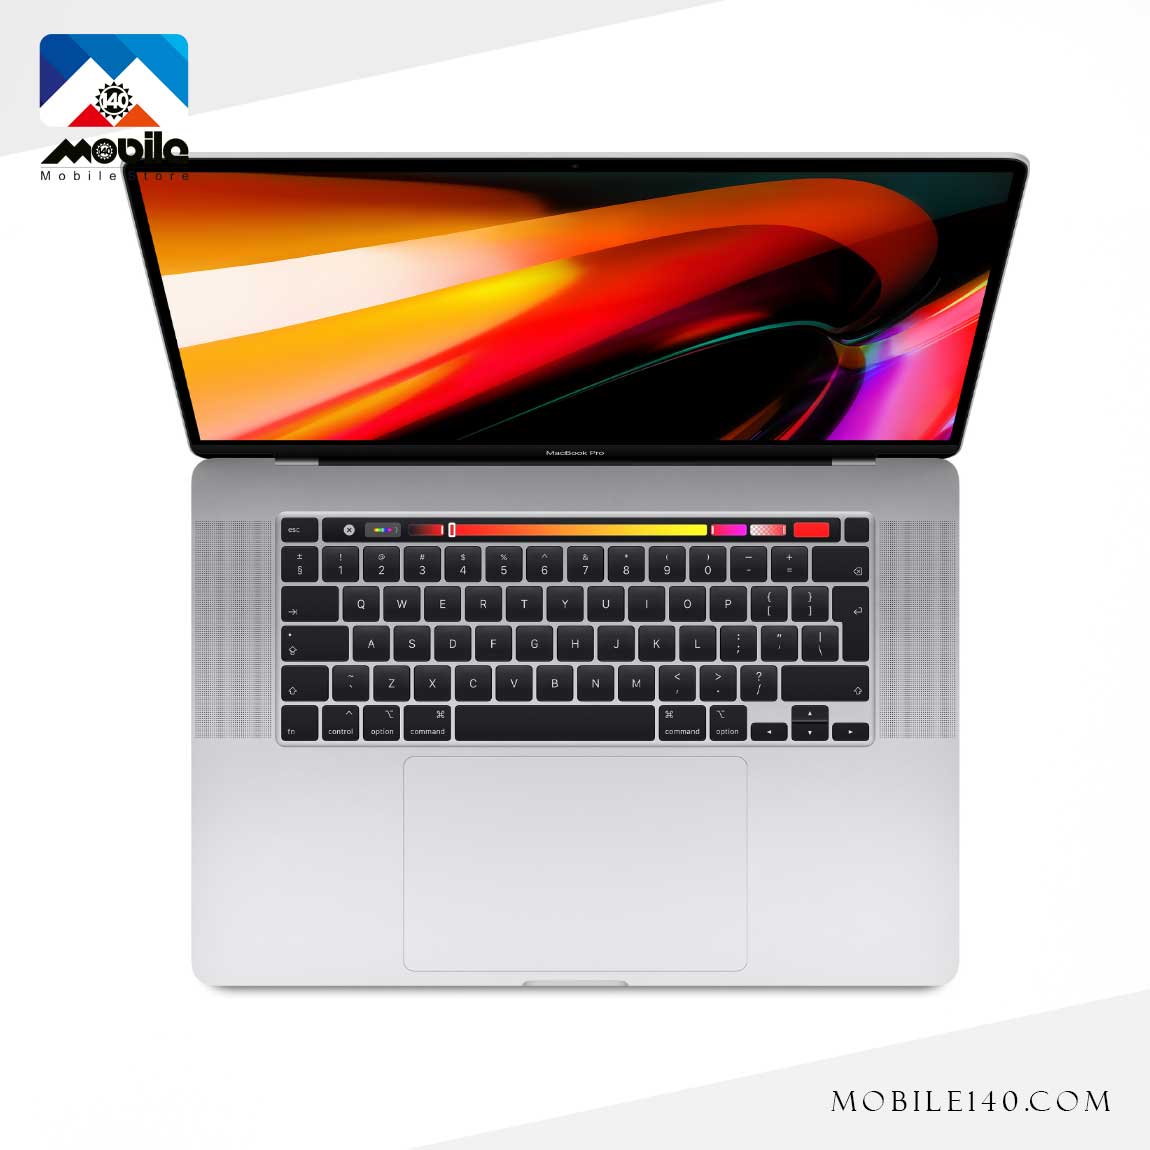 MacBook Pro 5VVk2 Core i9  1